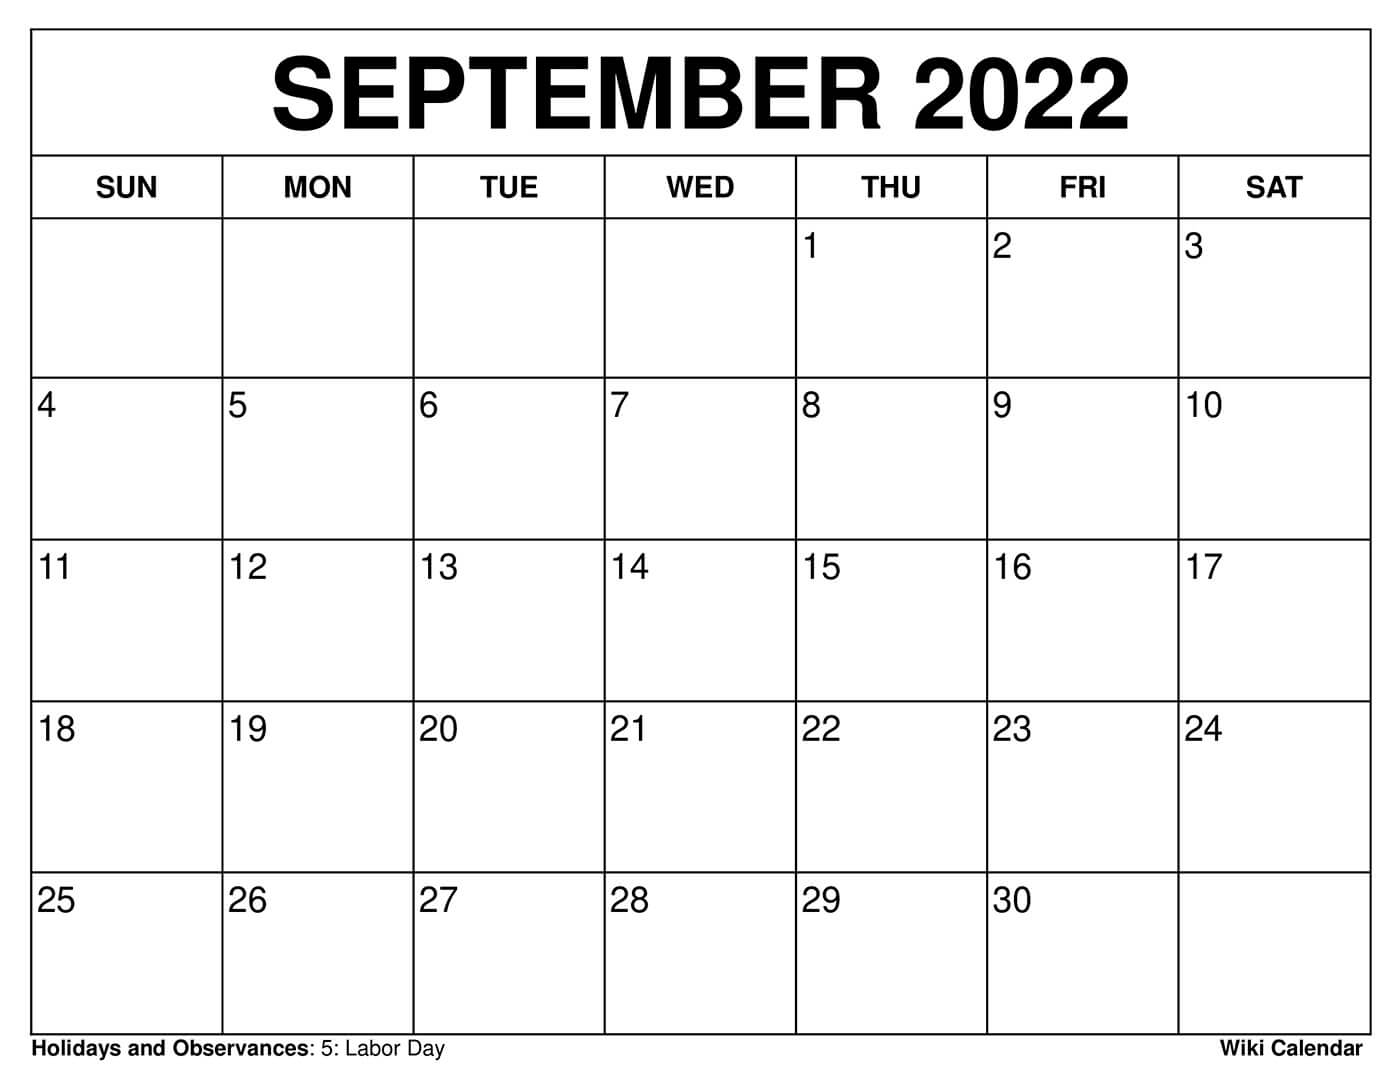 National Day Calendar September 2022 Free Printable September 2022 Calendars - Wiki Calendar